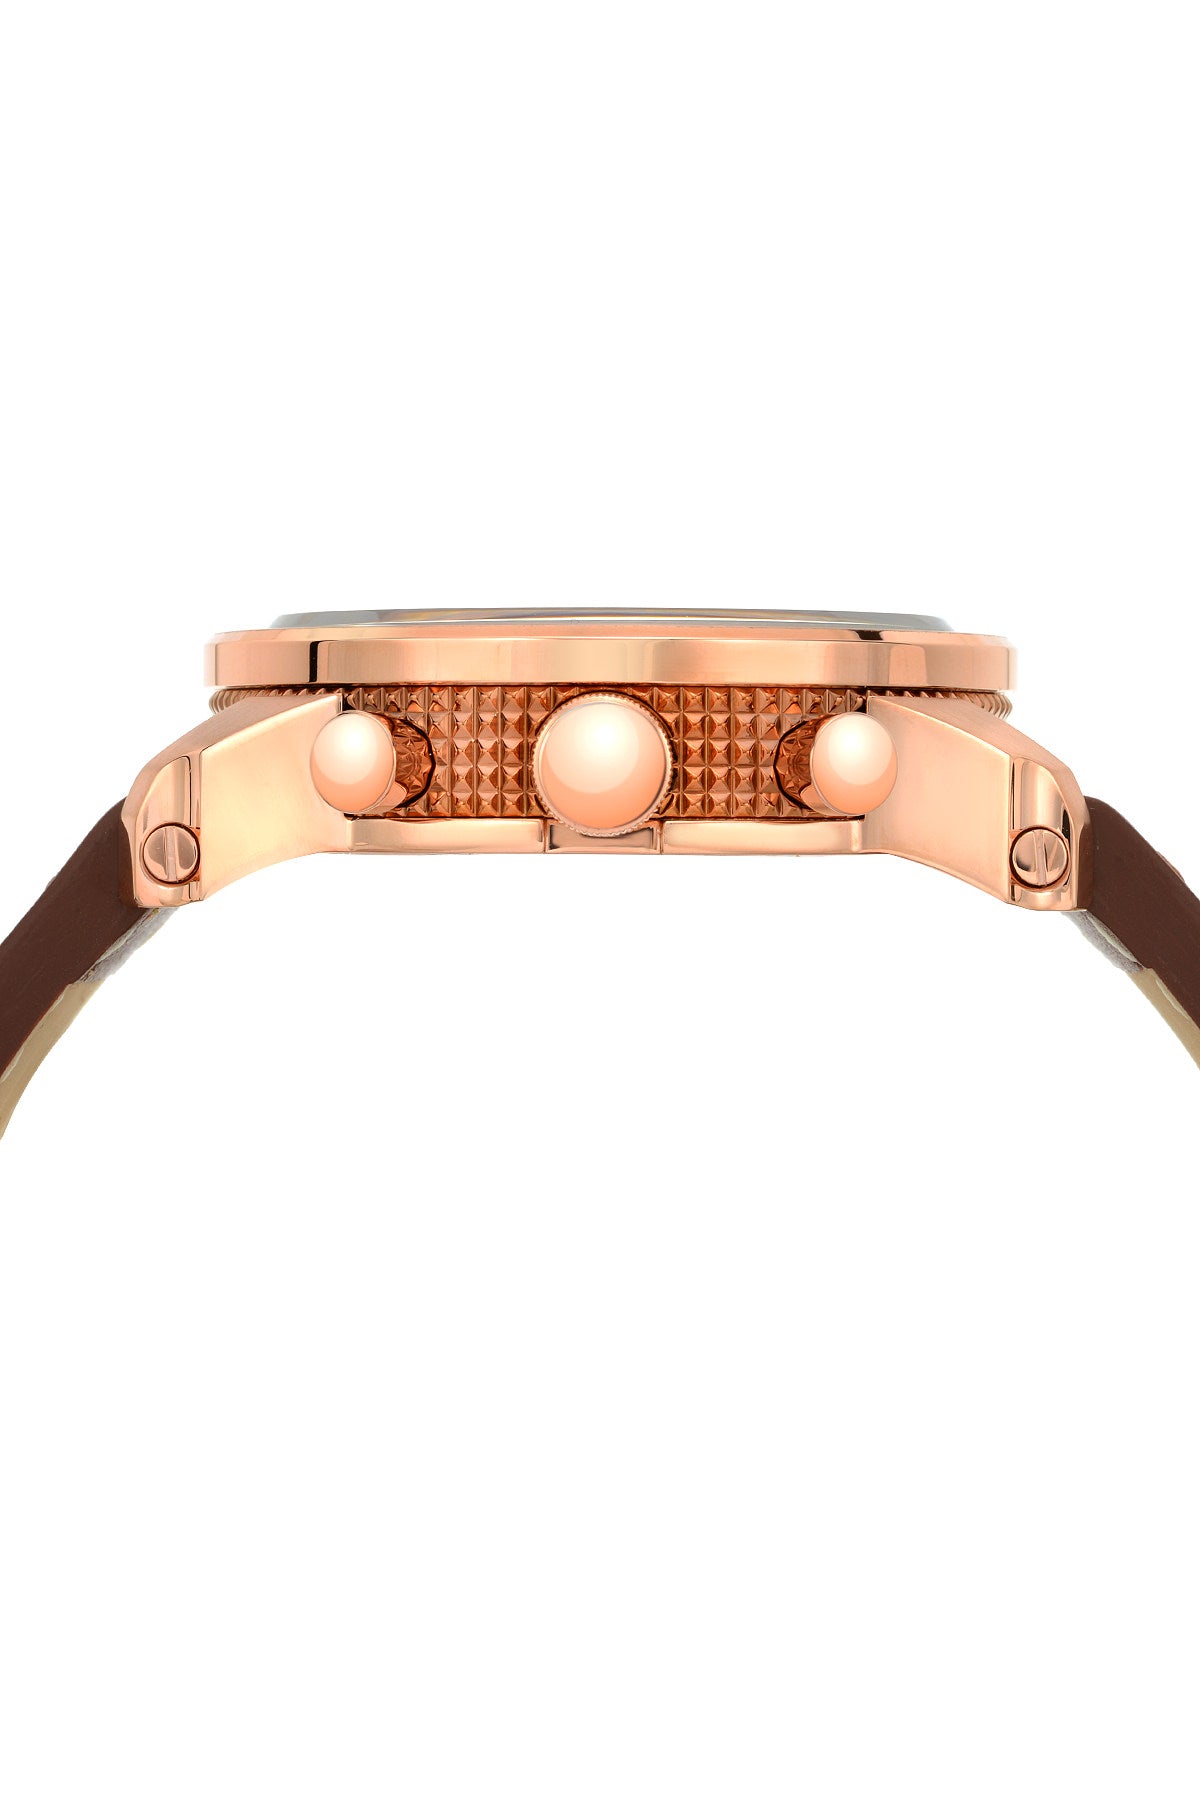 Porsamo Bleu Demetrios luxury chronograph men's watch, genuine leather band, rose, brown 602CDEL